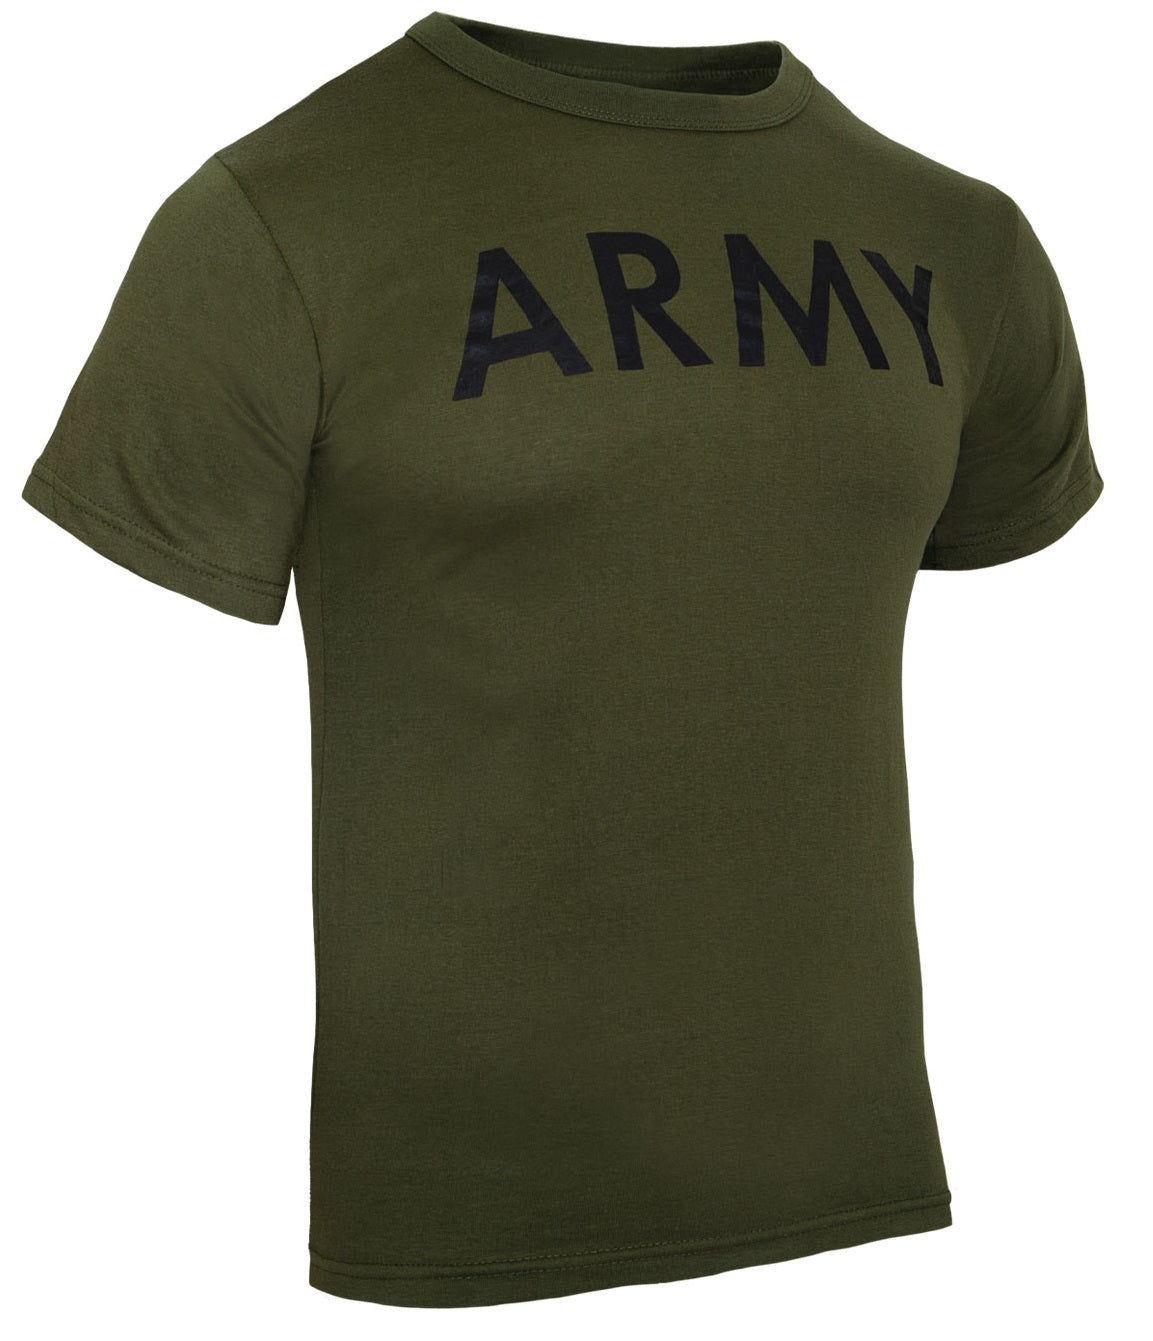 Rothco Olive Drab Military PT Shirt - ARMY